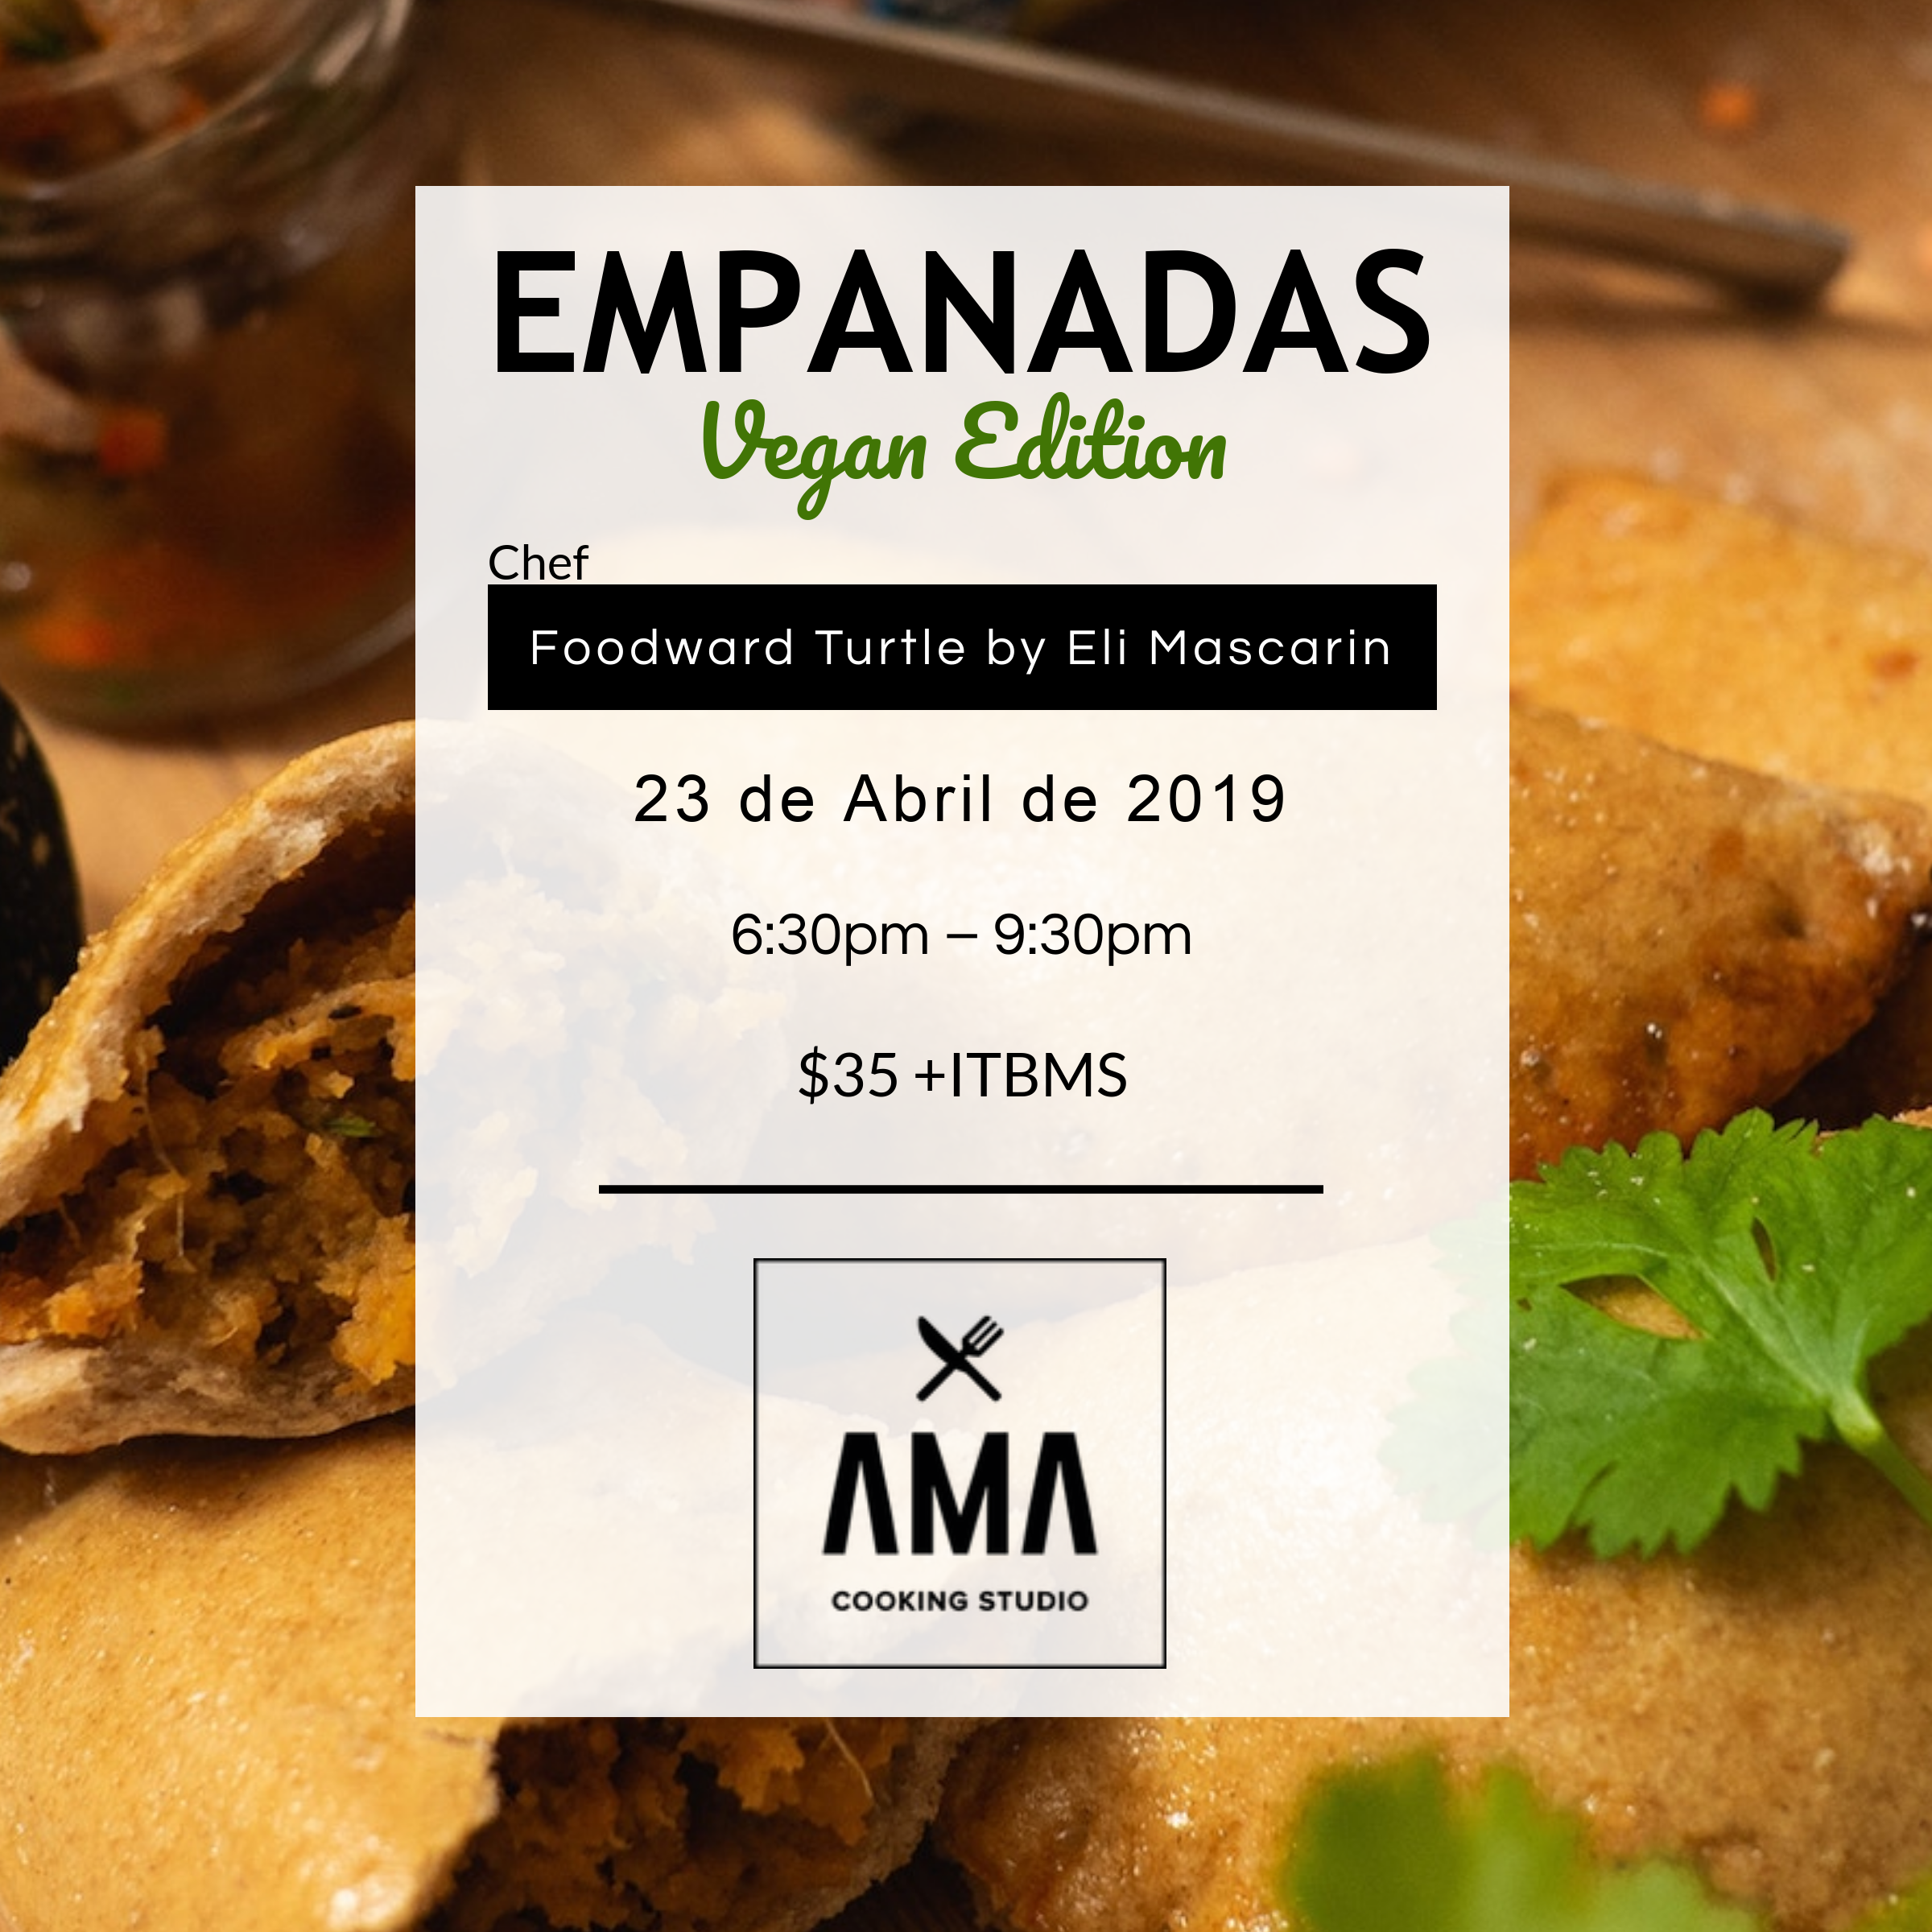 Empanadas: Vegan Edition